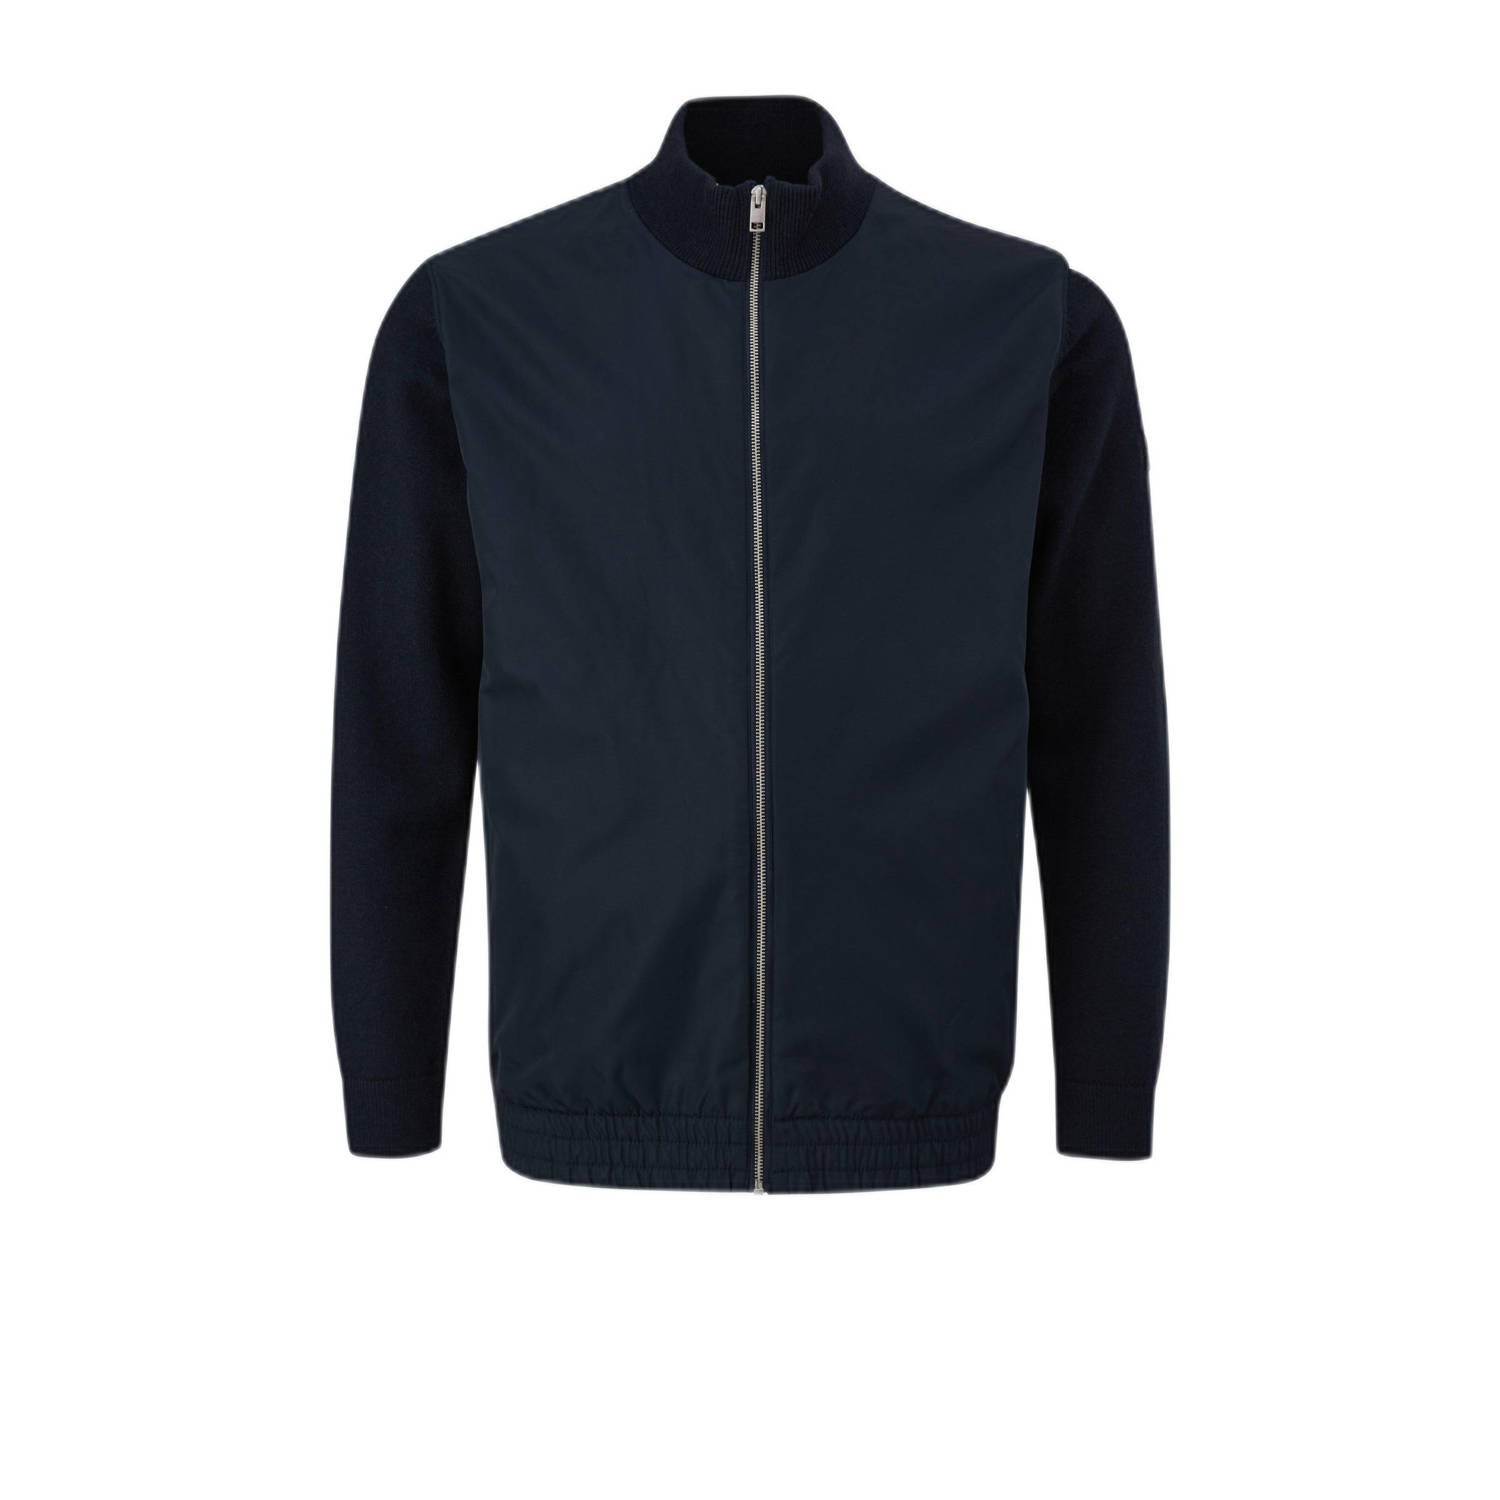 S.Oliver Big Size vest Plus Size met wol en logo blauw zwart